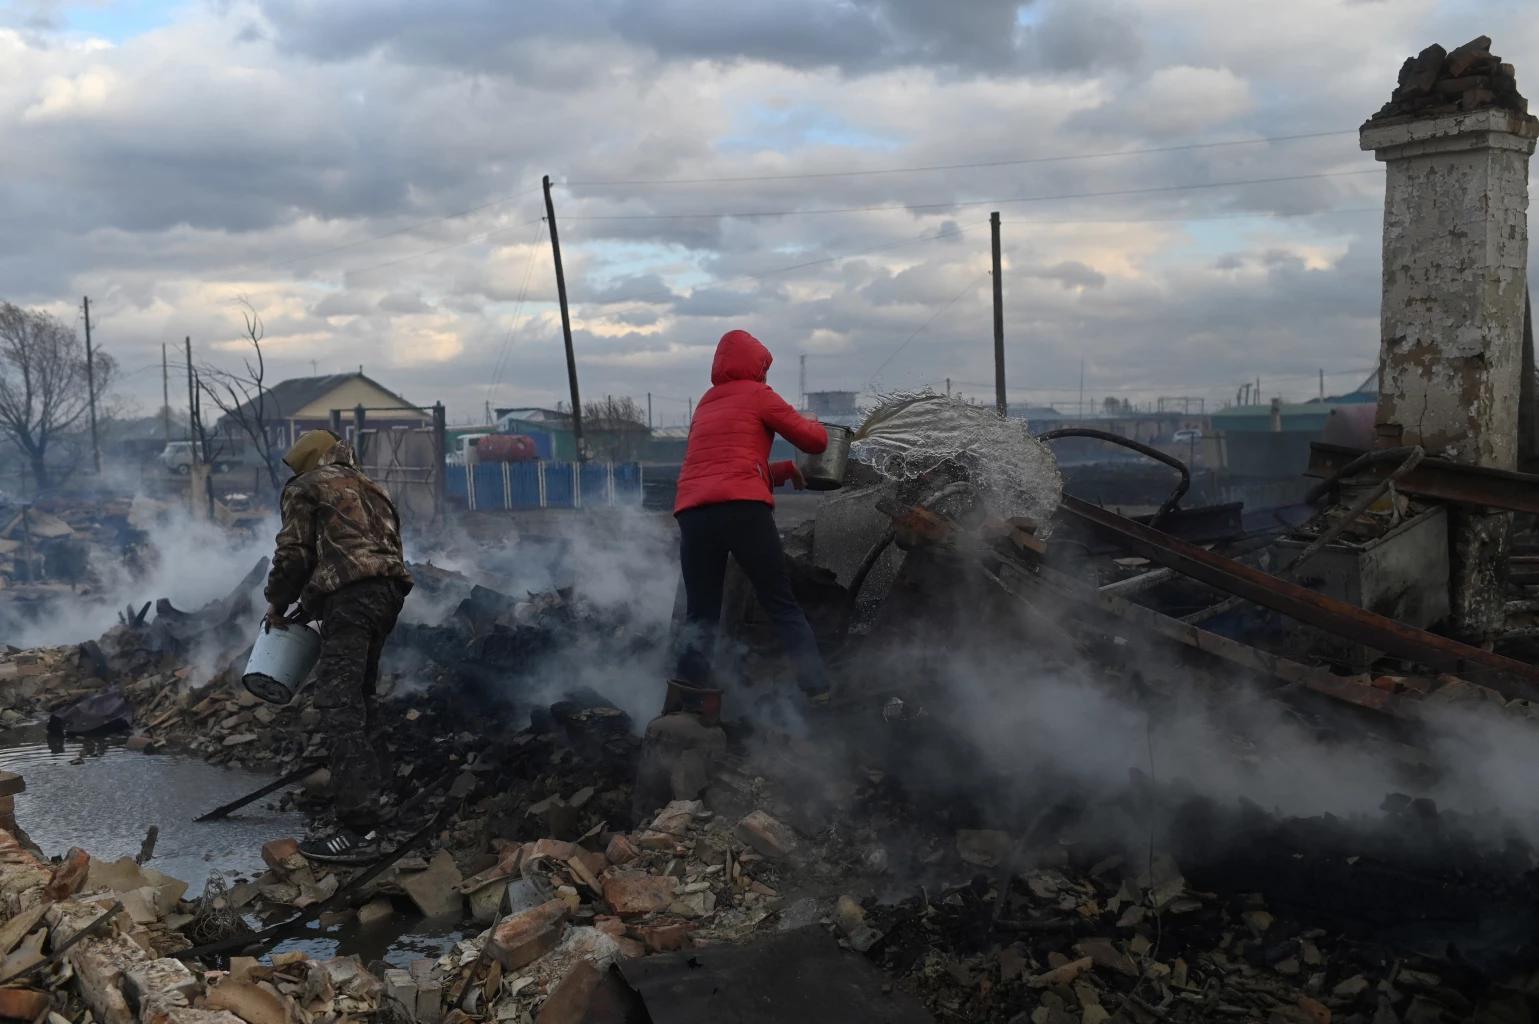 Fires kill at least 8 in Siberia, high winds hamper extinguishing efforts